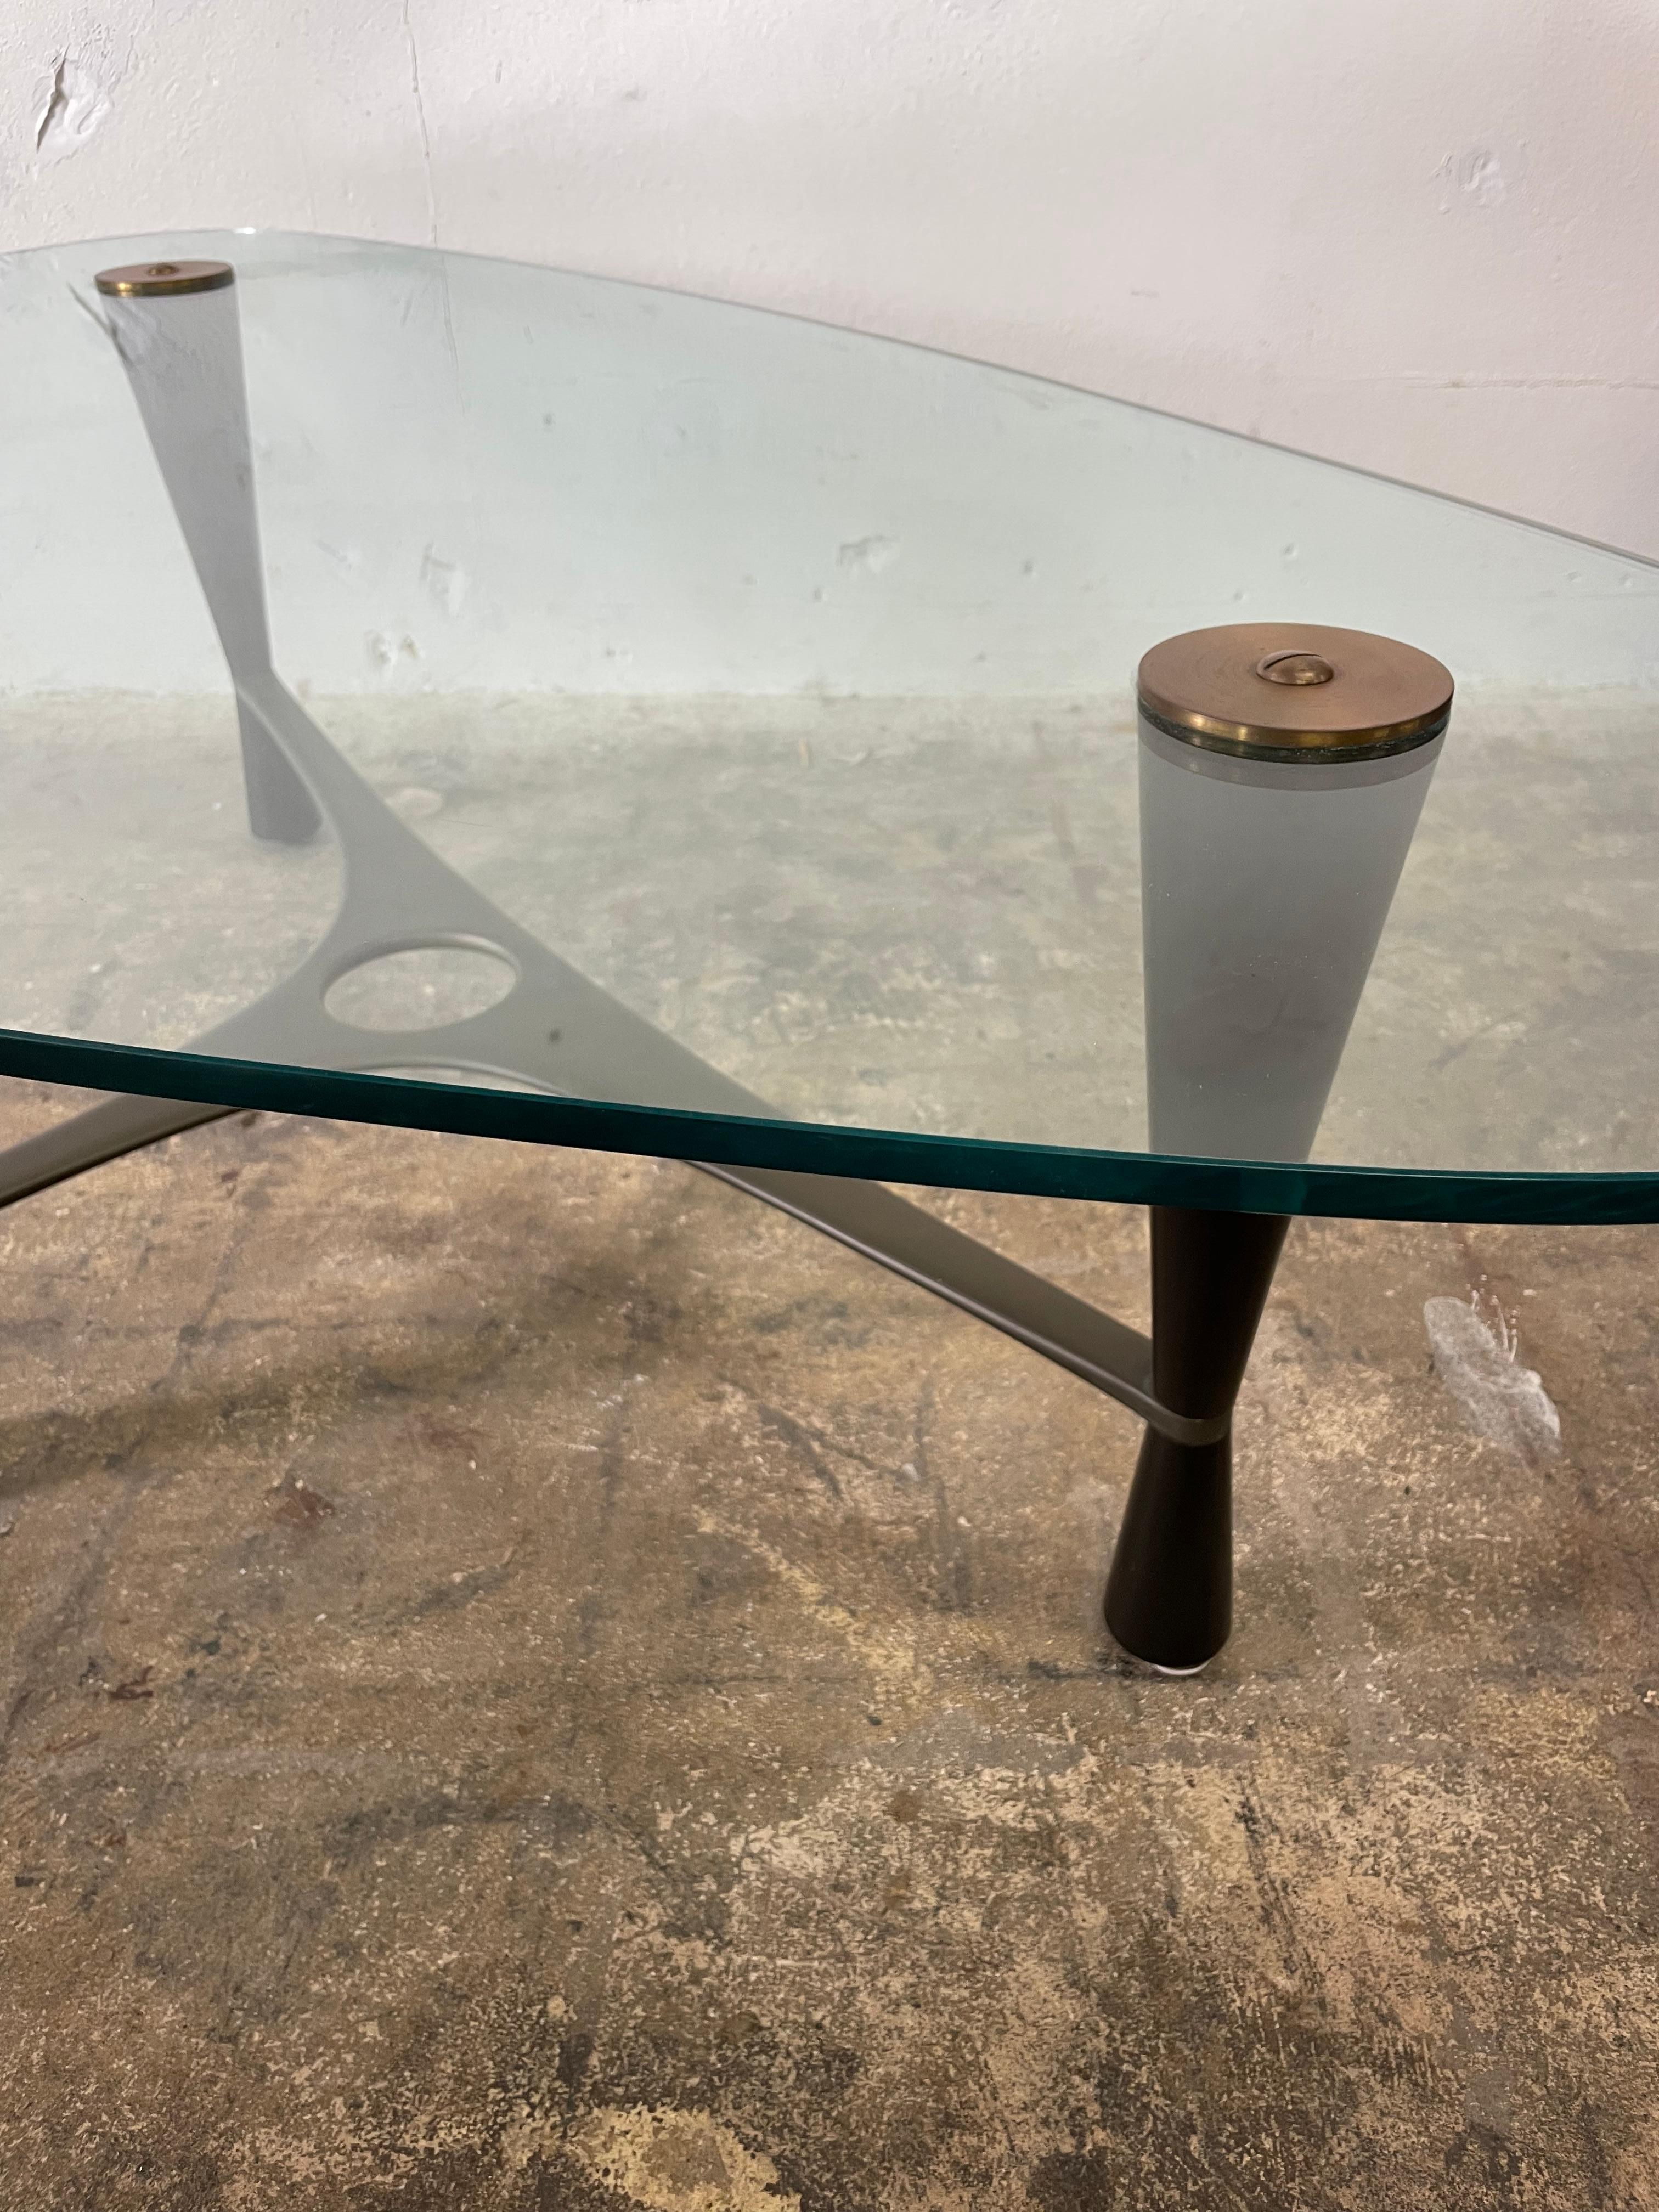 Iconic and Rare Edward Wormley for Dunbar coffee table. Model 5309. Brass stretcher. Original asymmetrical glass top. Ebonized wood. Original condition.